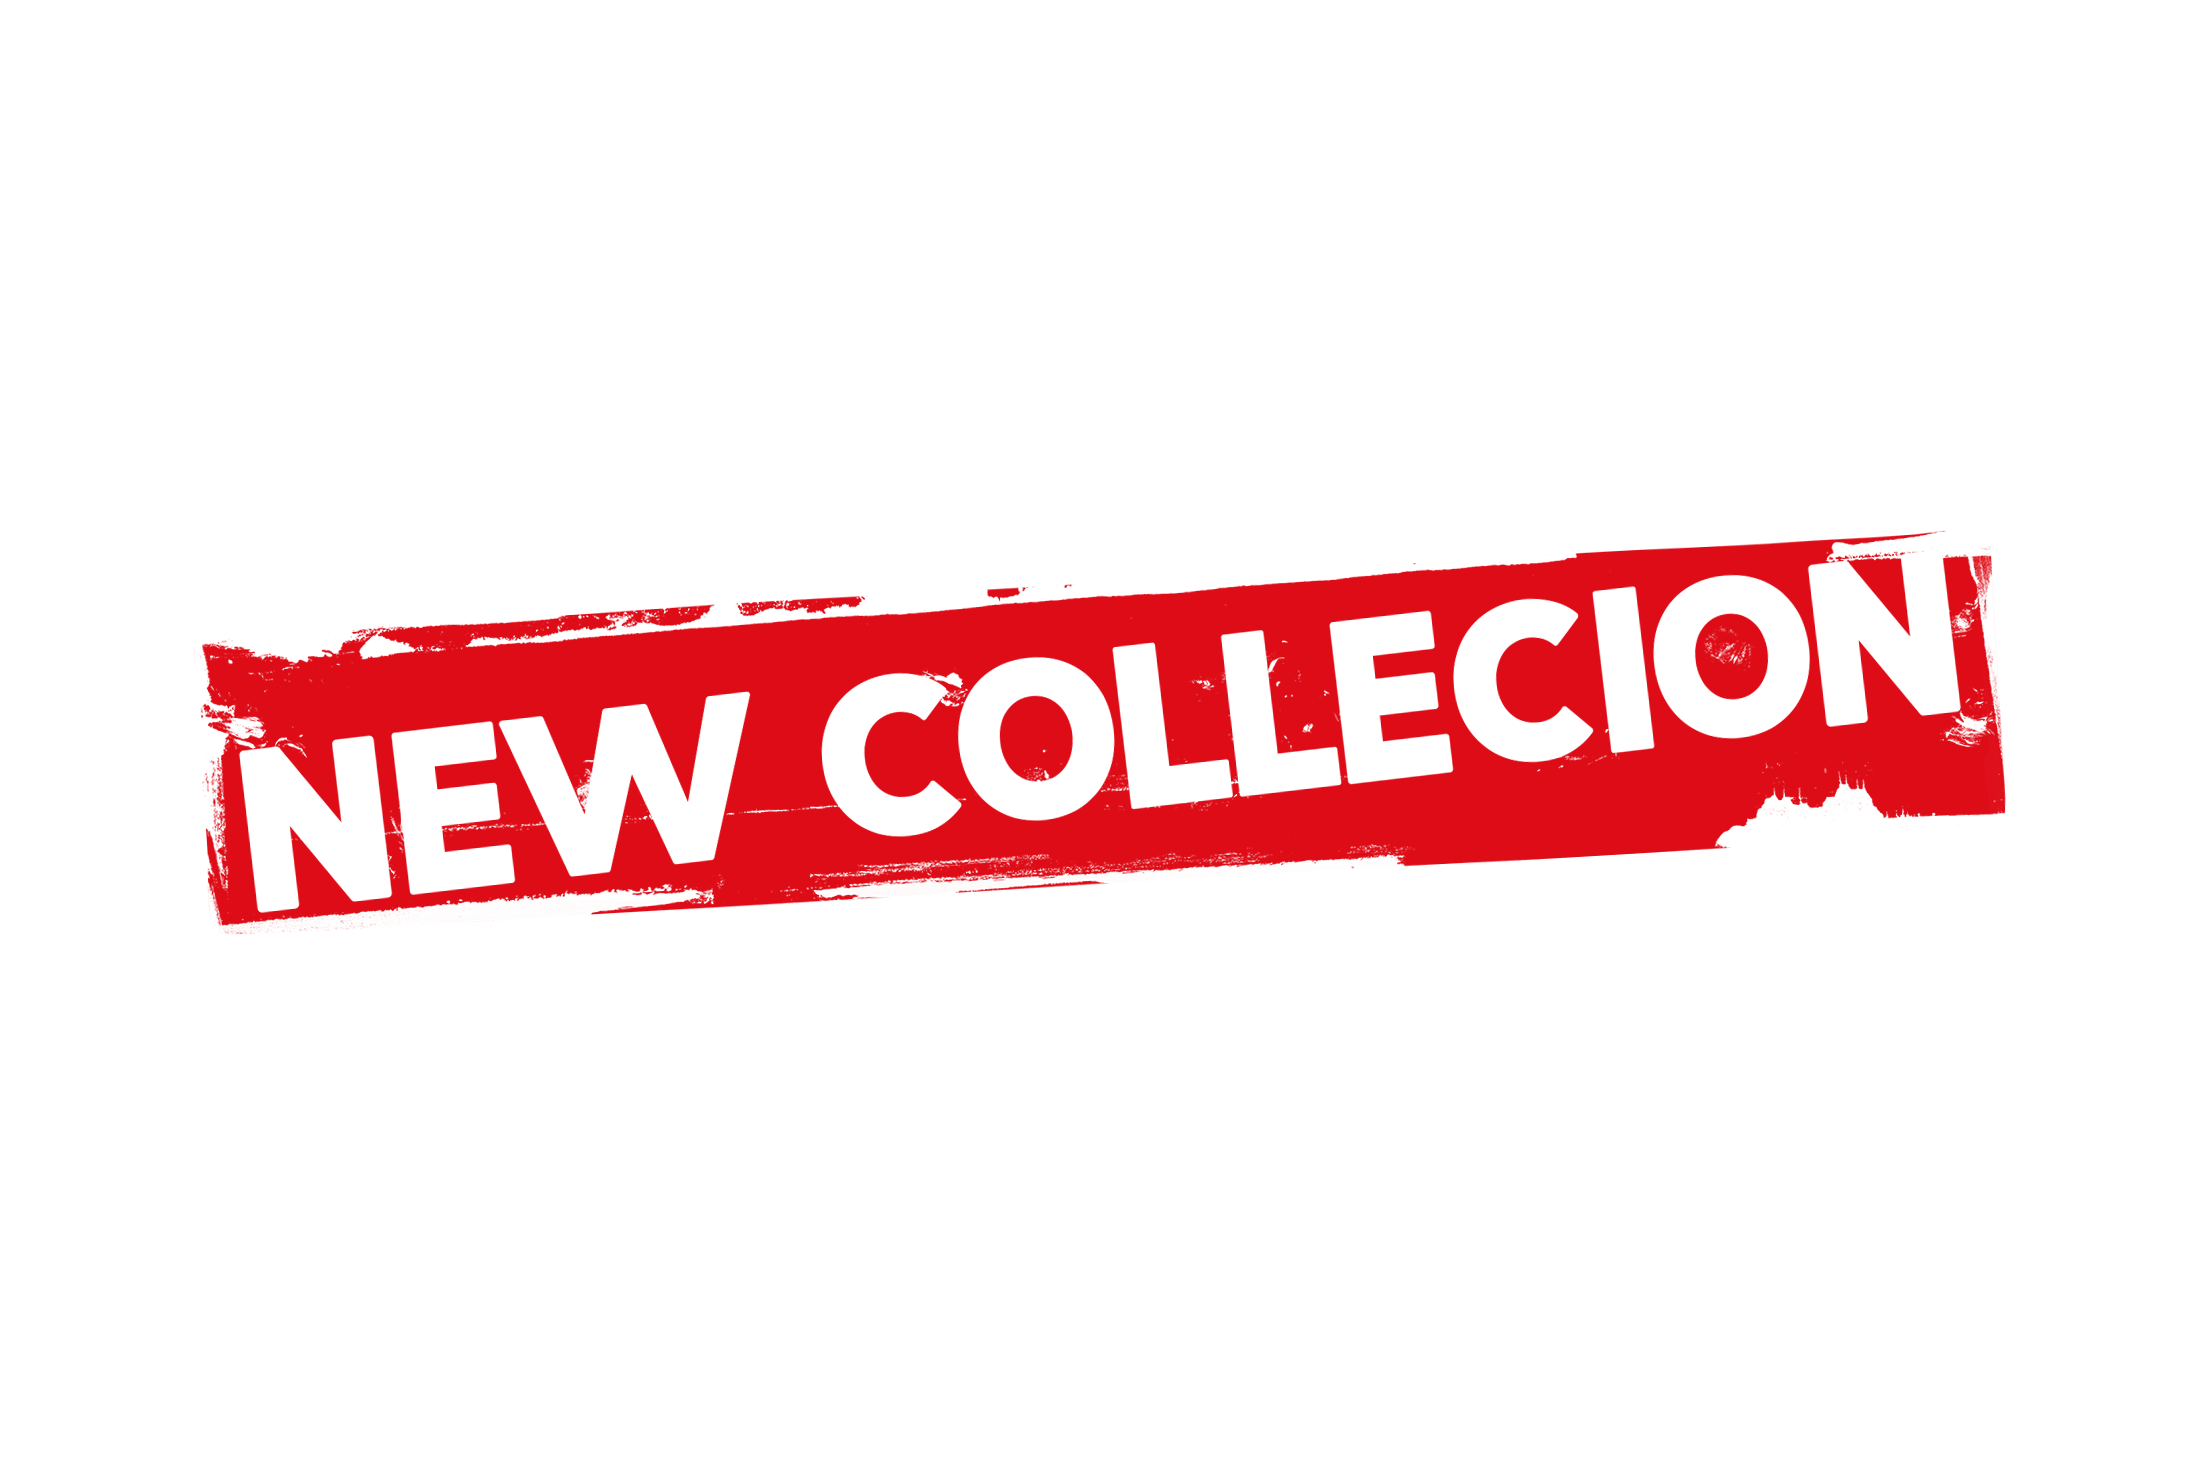 Grunge new collecion label PSD